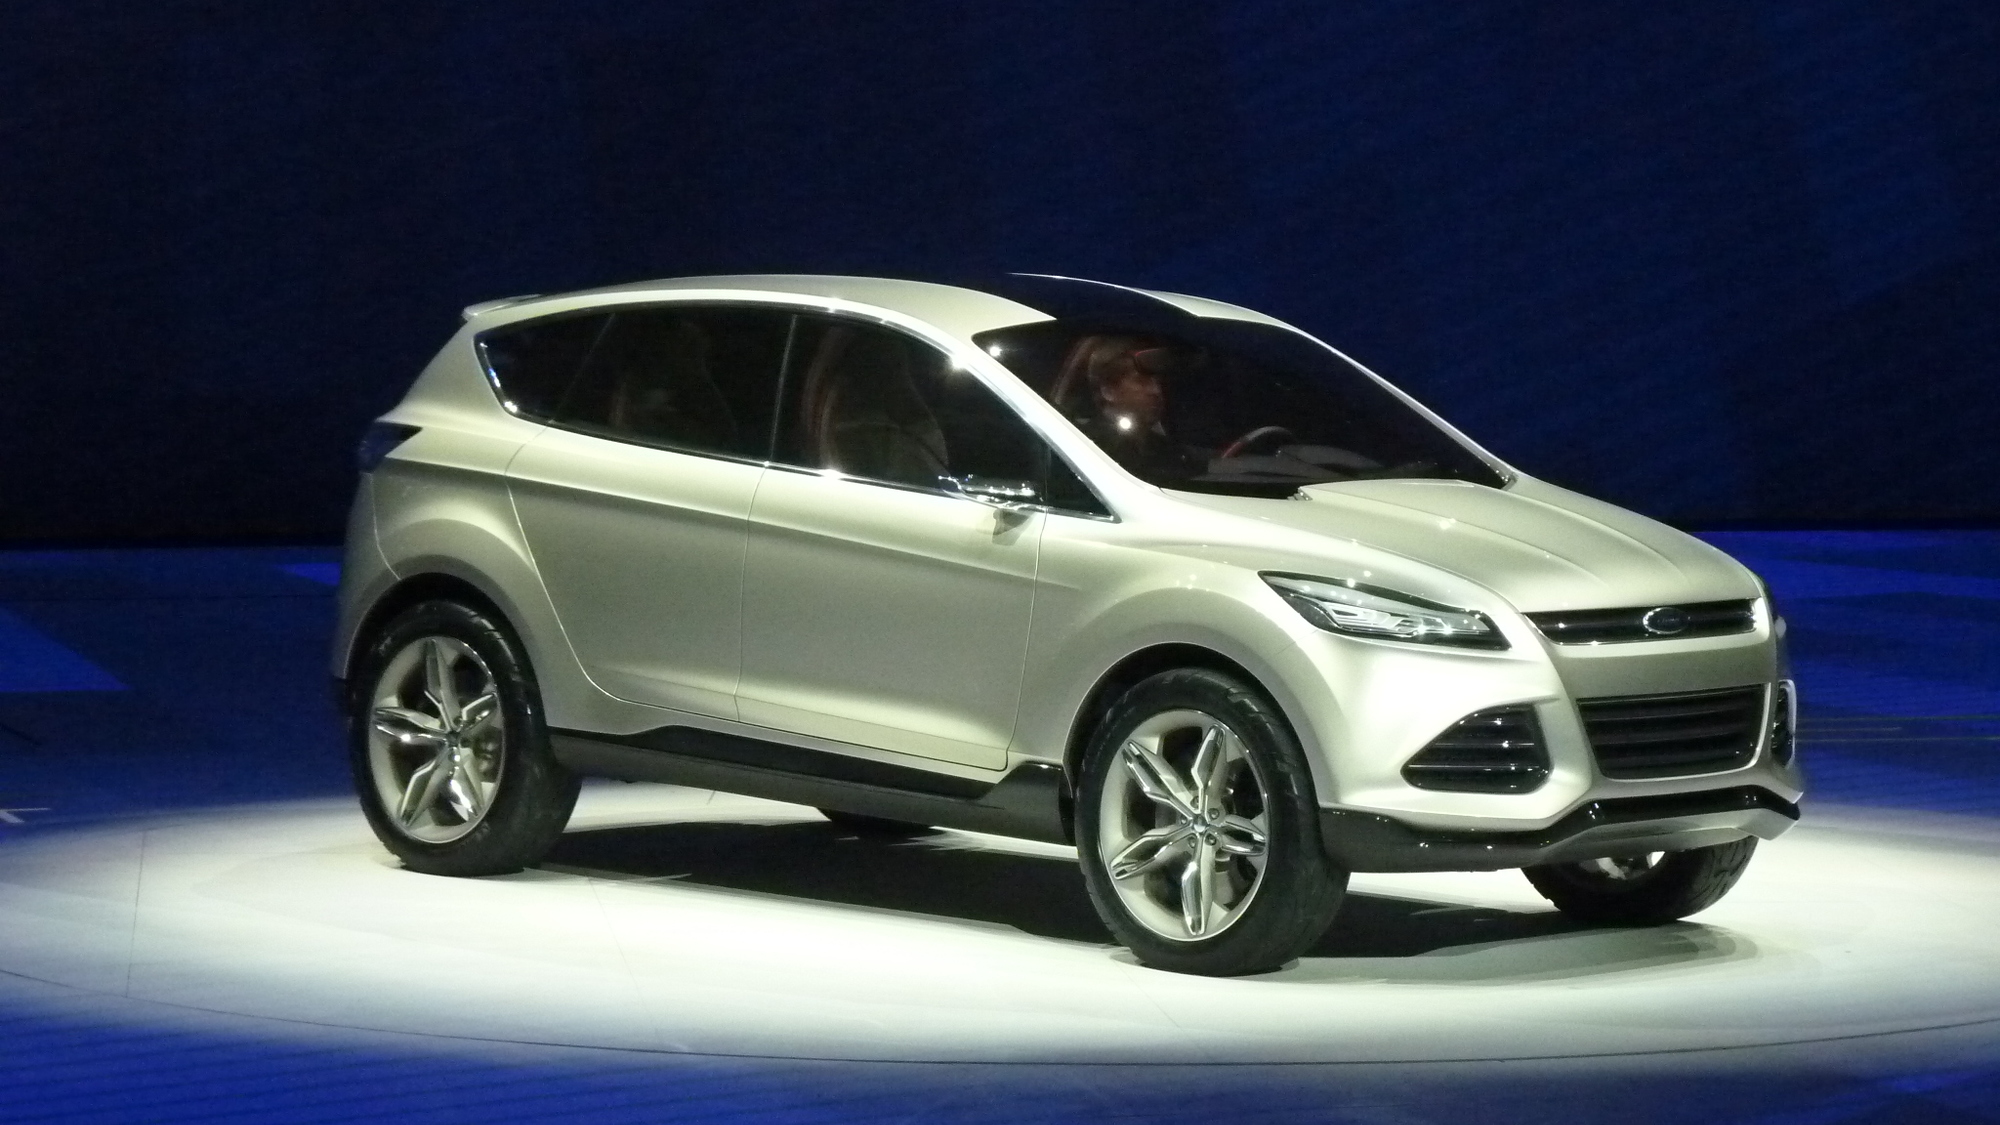 2011 Ford Vertrek concept